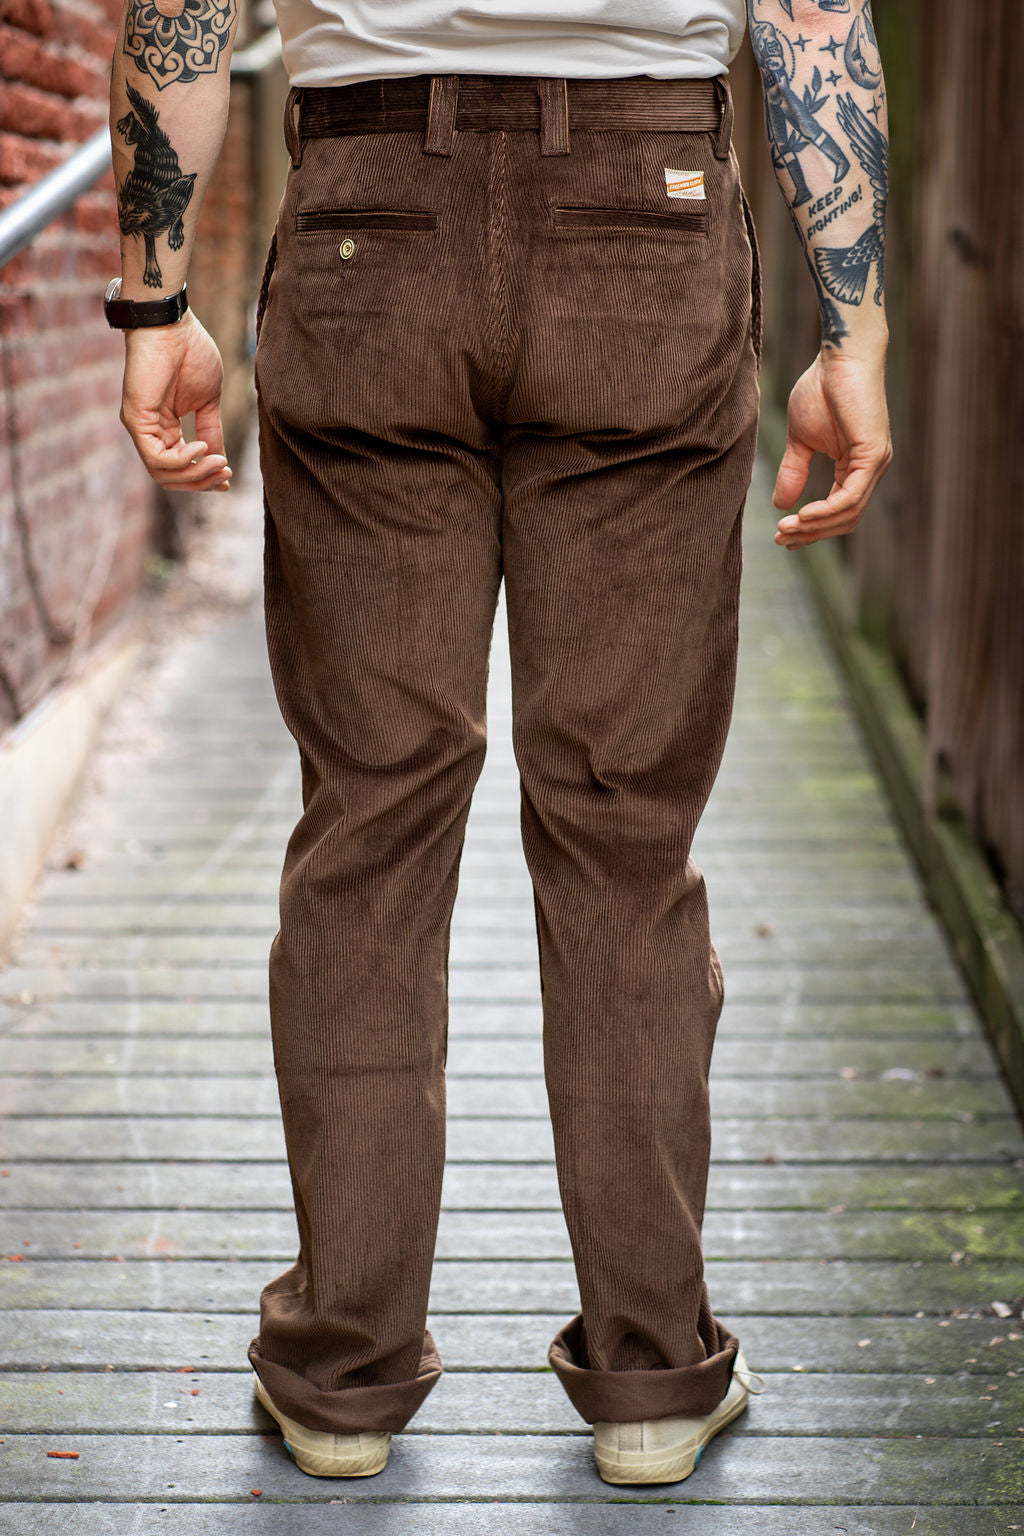 Freenote Cloth Deck Pant - Chocolate Cord